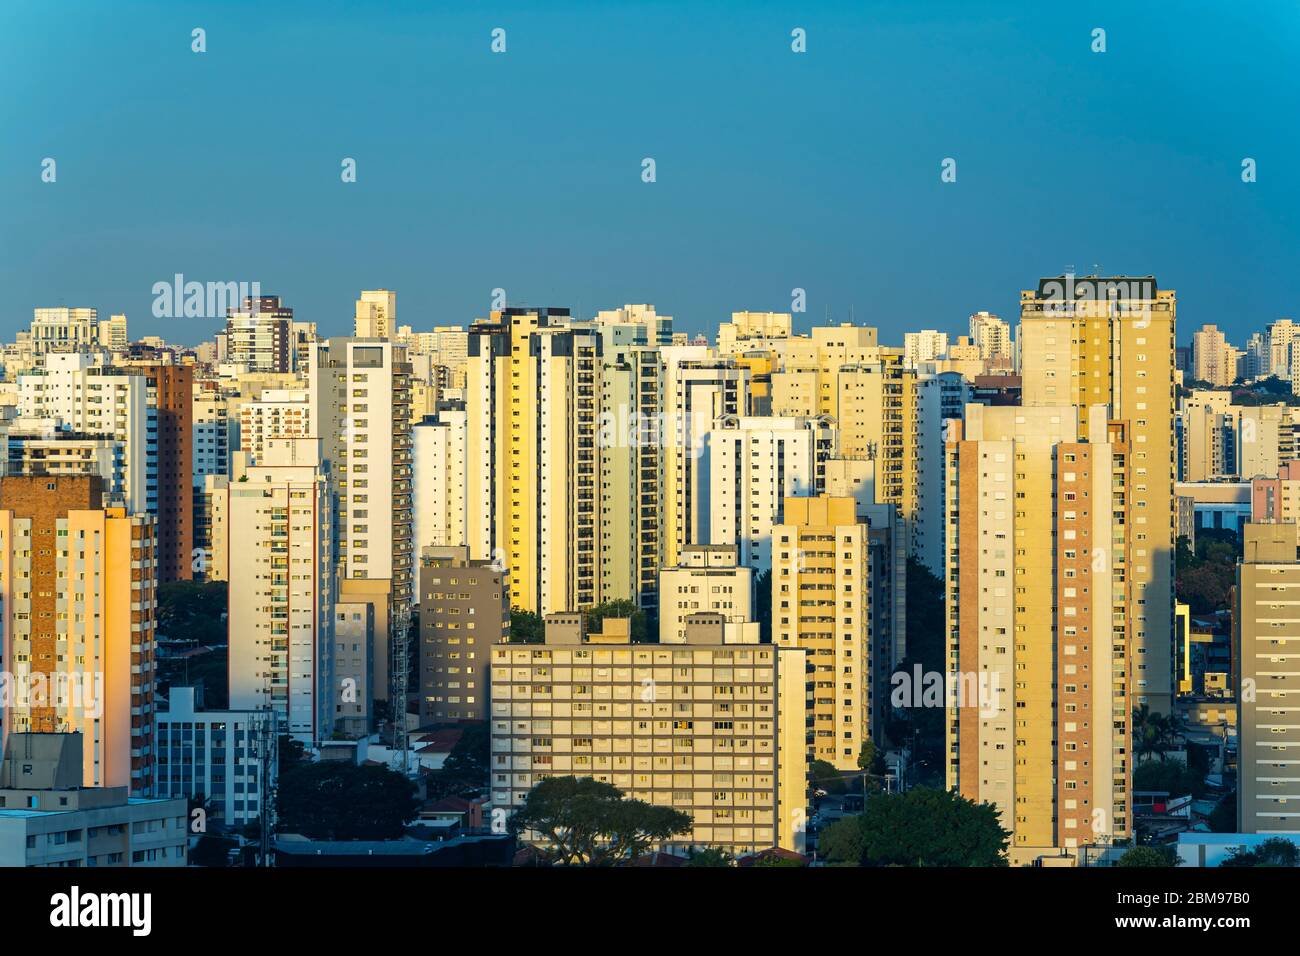 Big city, building, and blue sky. Sao Paulo city, Brazil. Stock Photo